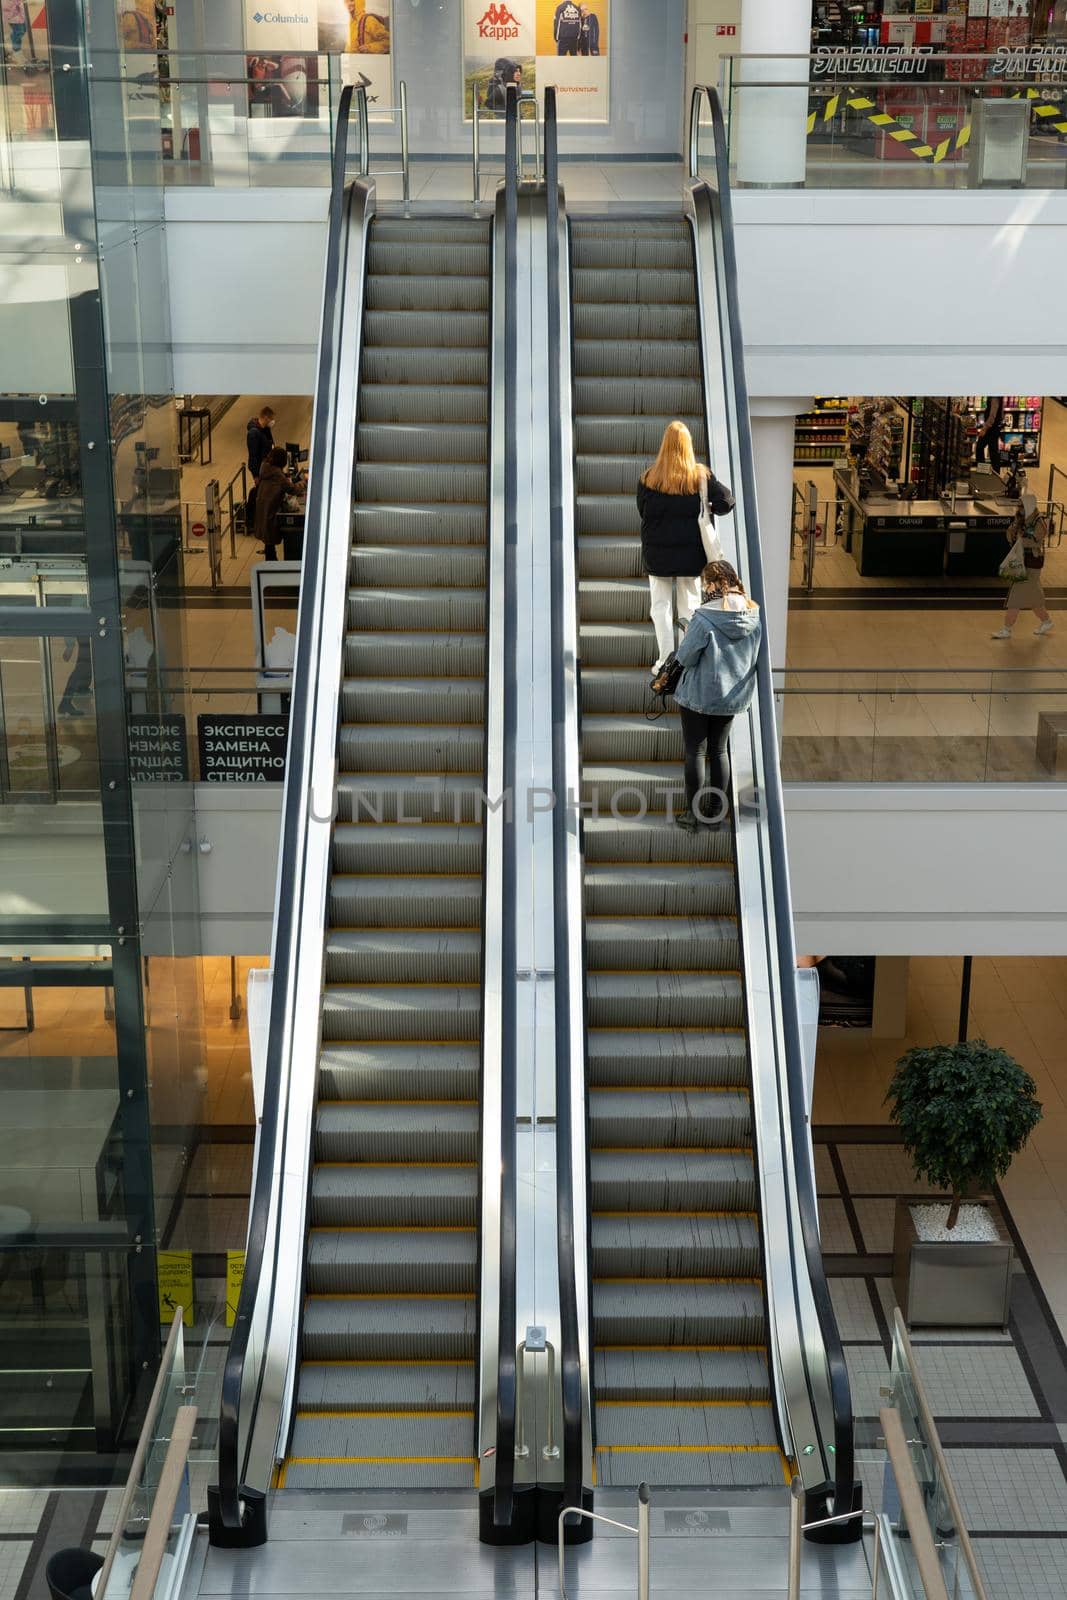 Grodno, Belarus - April 07, 2021: View on escalator in modern shopping mall Triniti